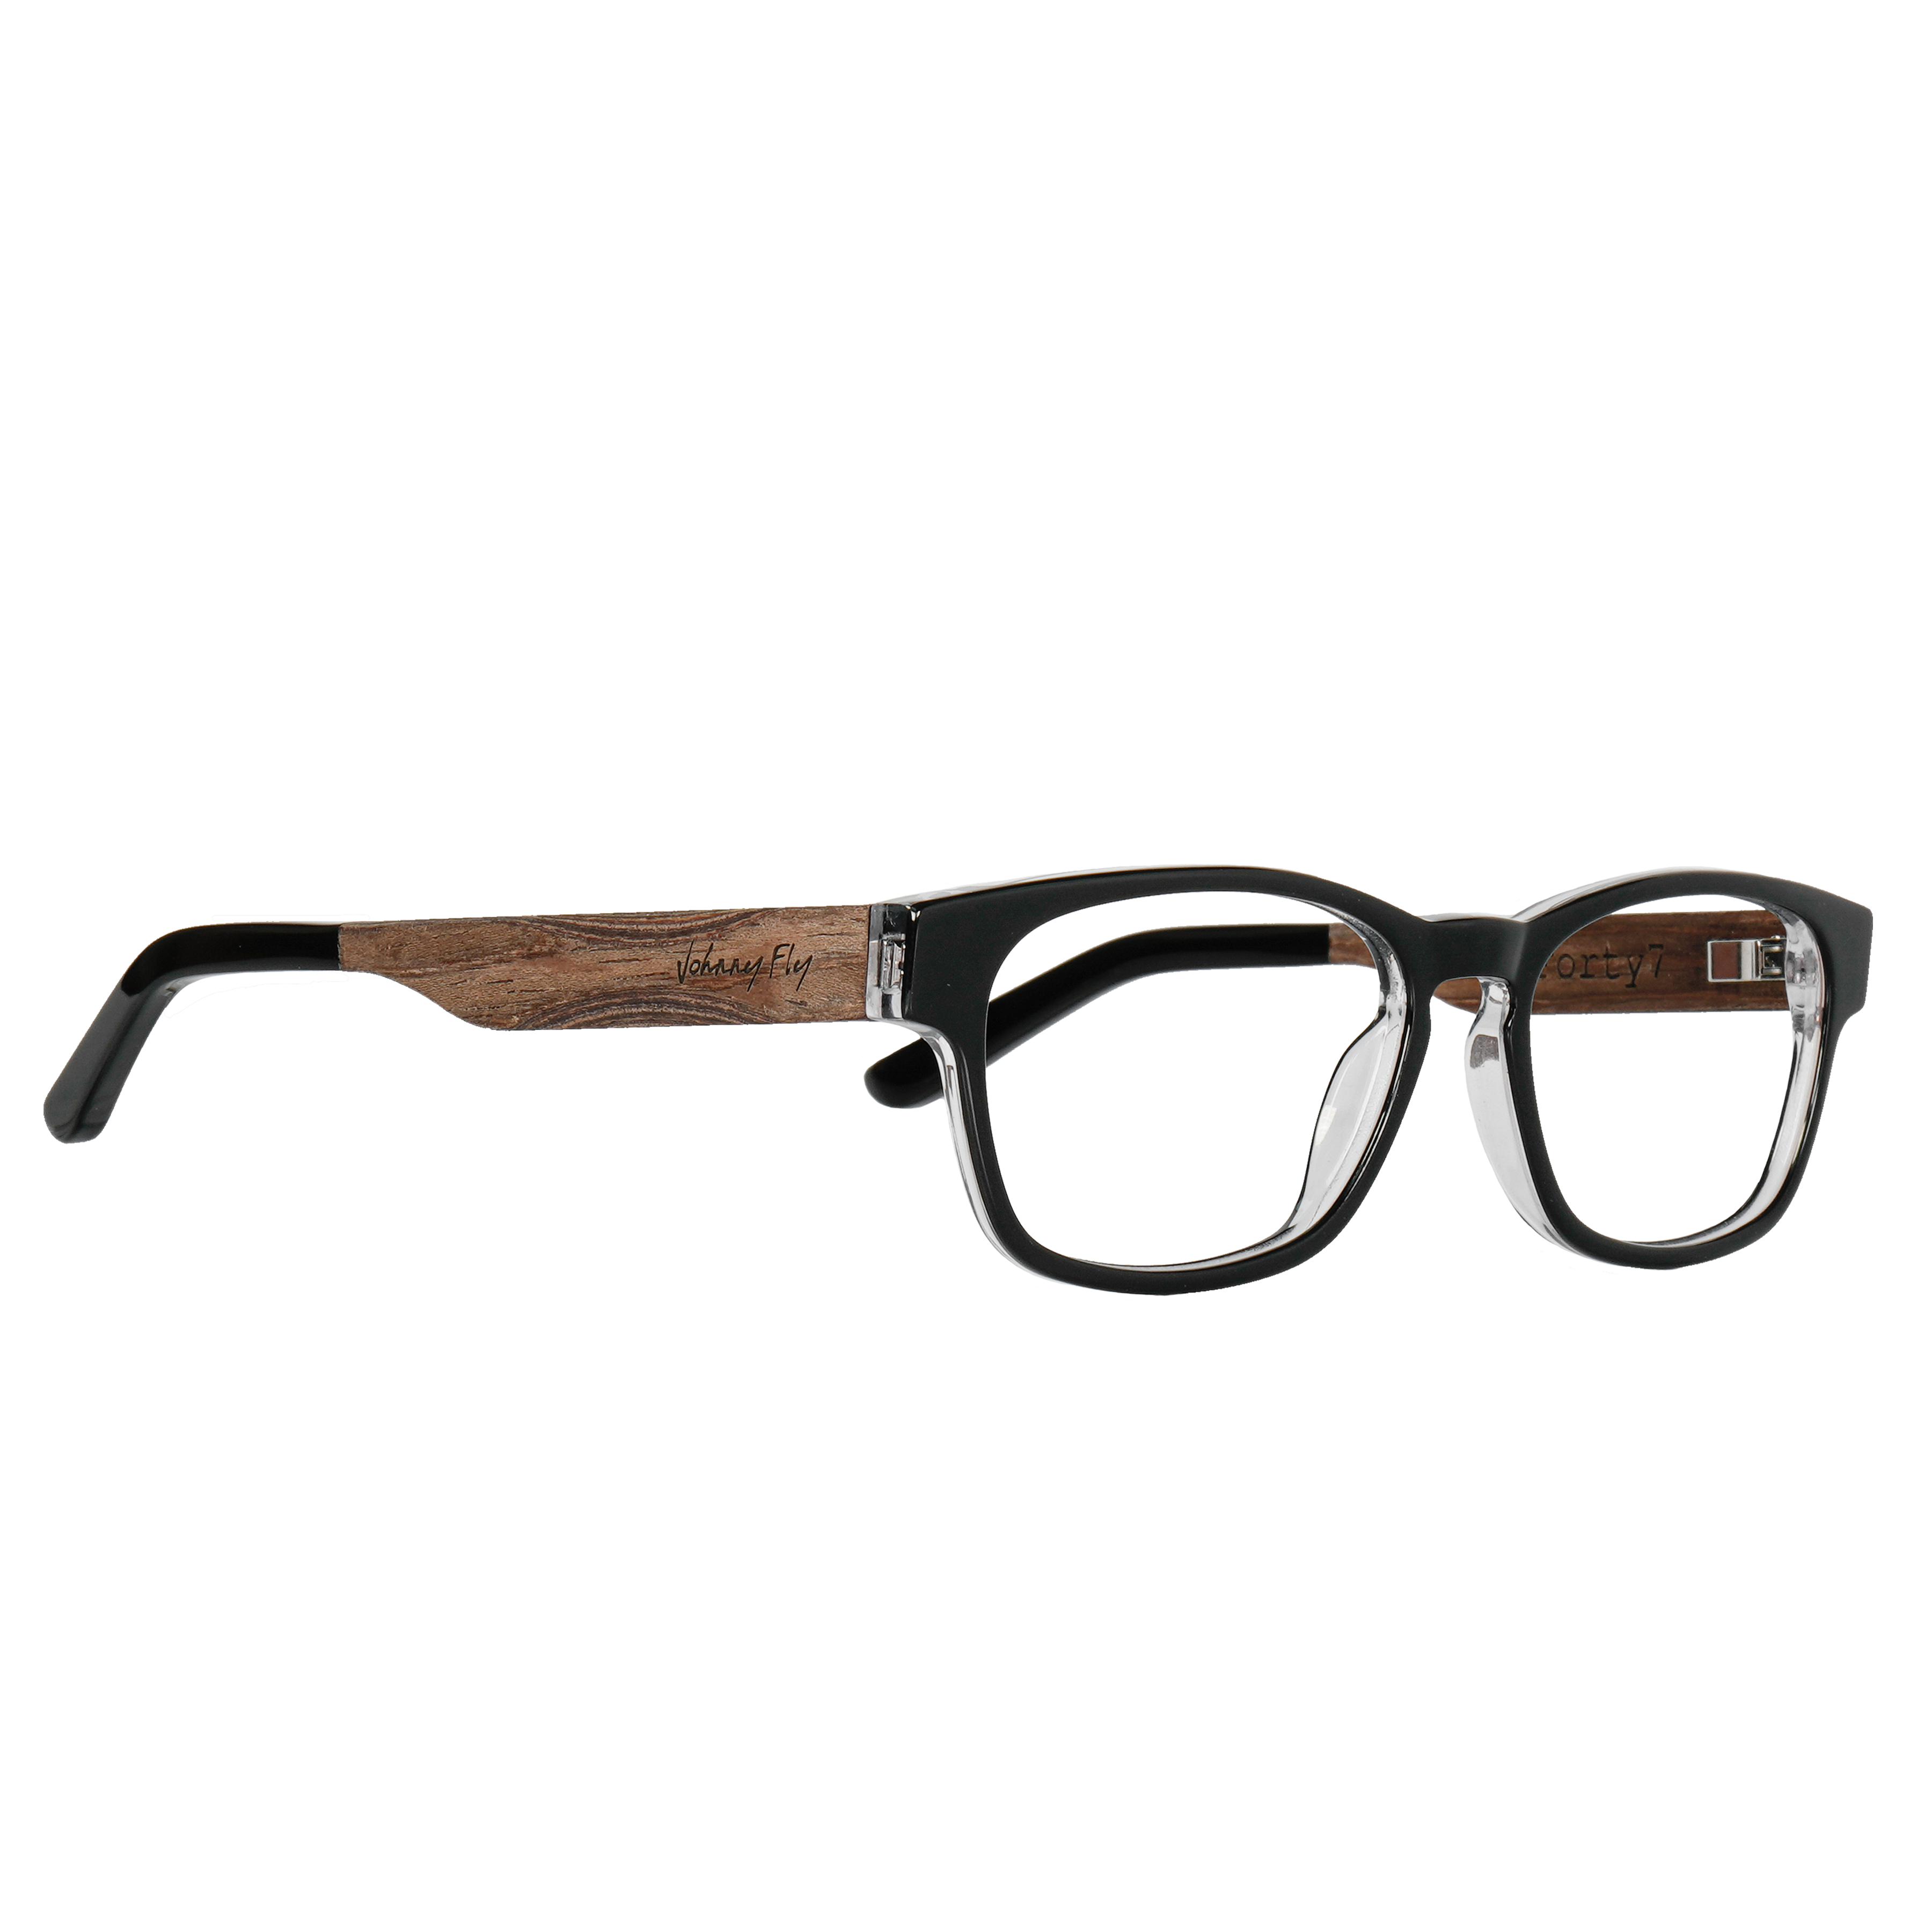 7FORTY7 - Black Crystal - Eyeglasses Frame - Johnny Fly Eyewear | 